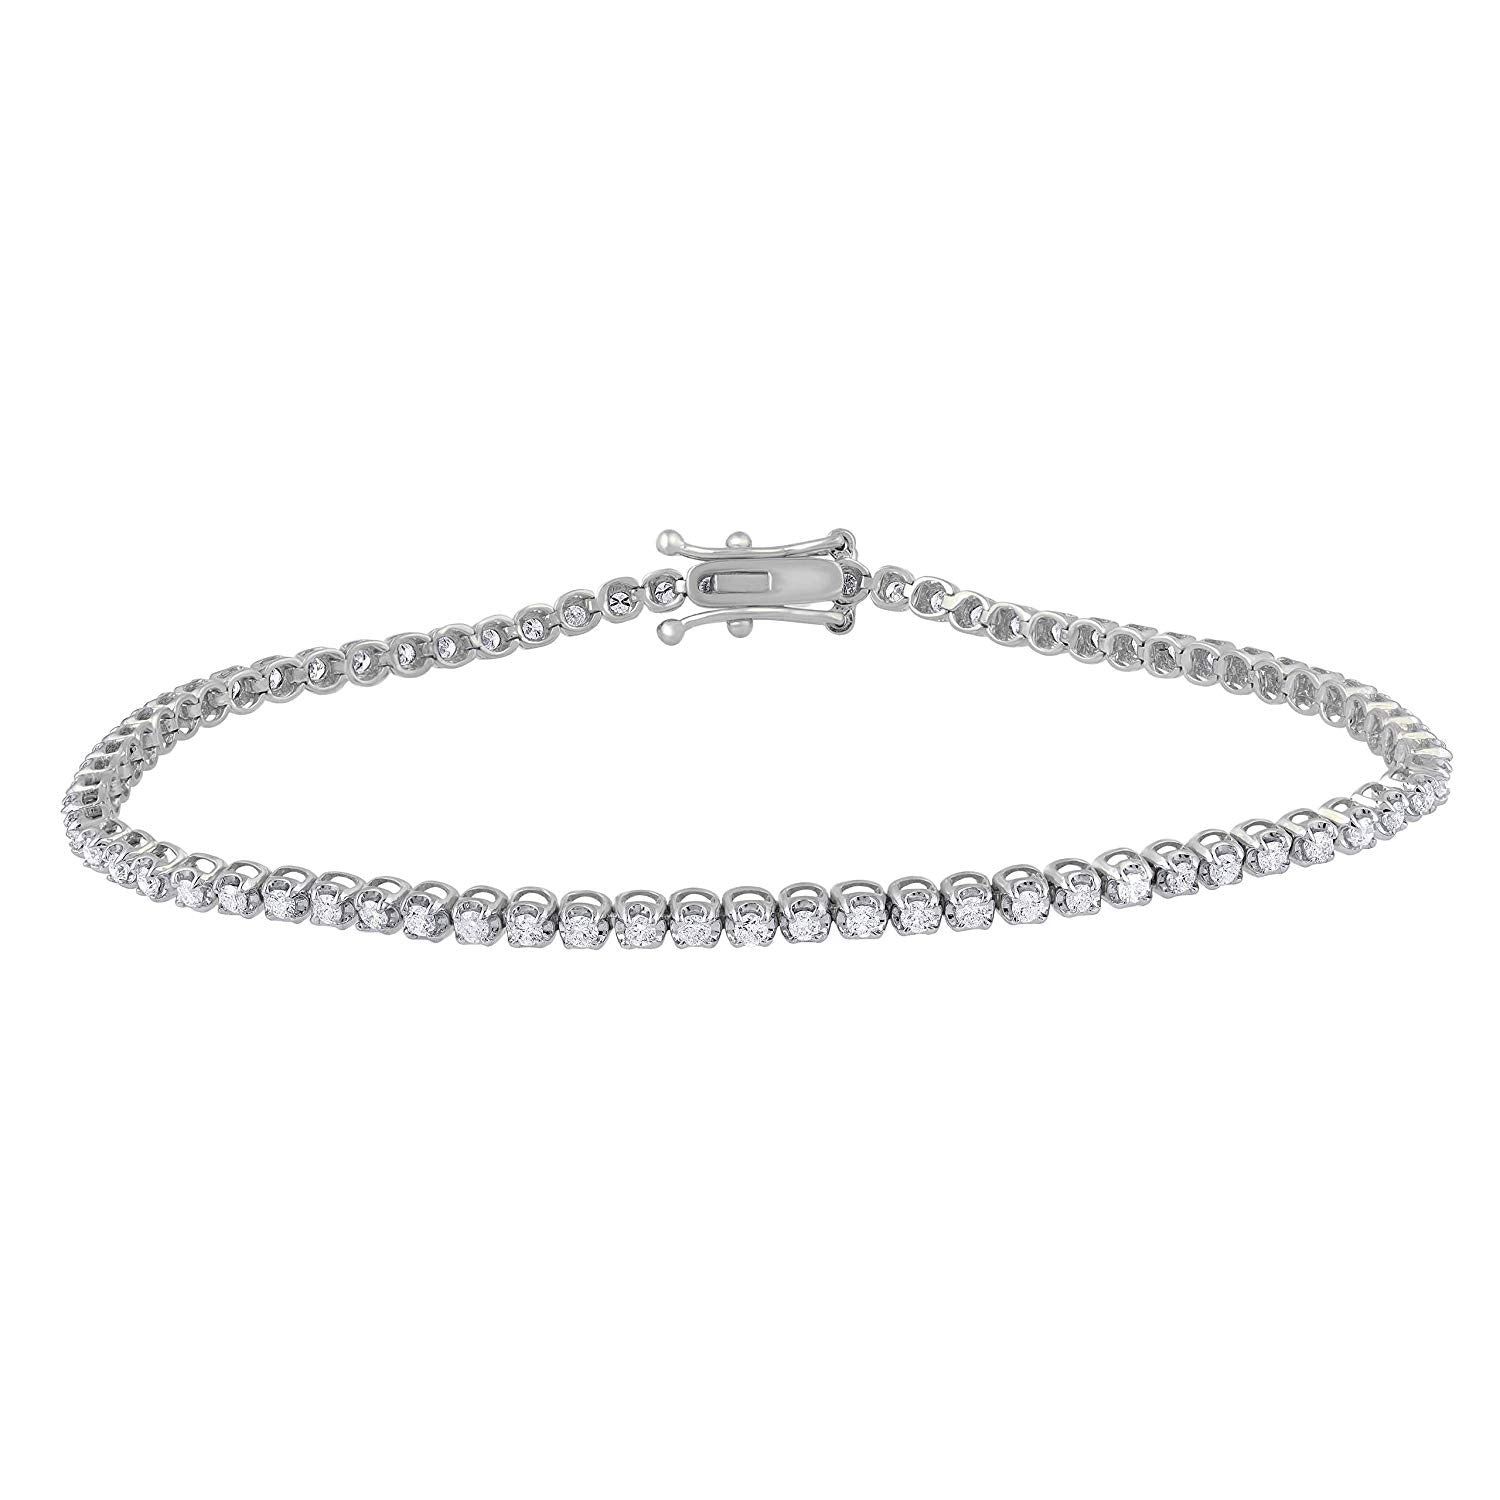 Mothers Day Gifts 1.00 Carat Natural Diamond Bracelet 10K White Gold (G-H Color